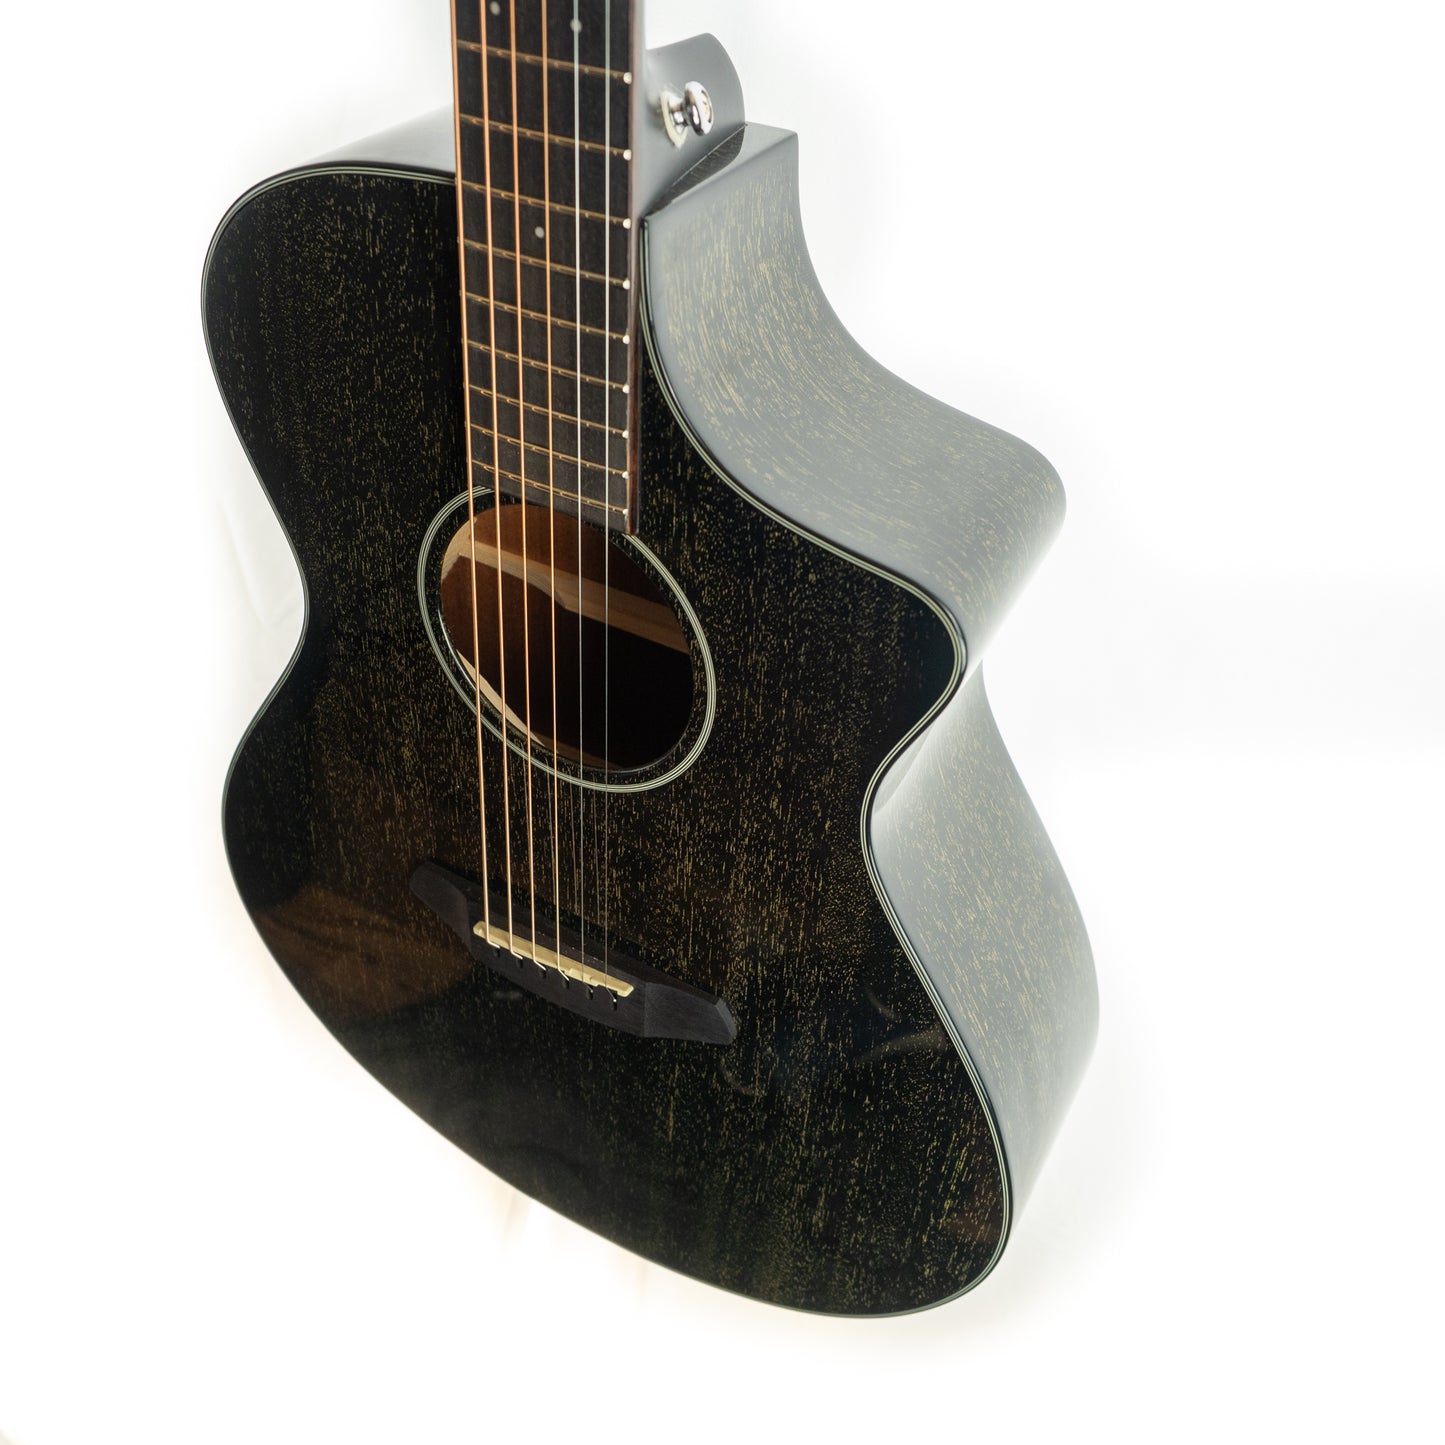 Breedlove Rainforest S Concert CE cutaway acoustic electric guitar Black Gold